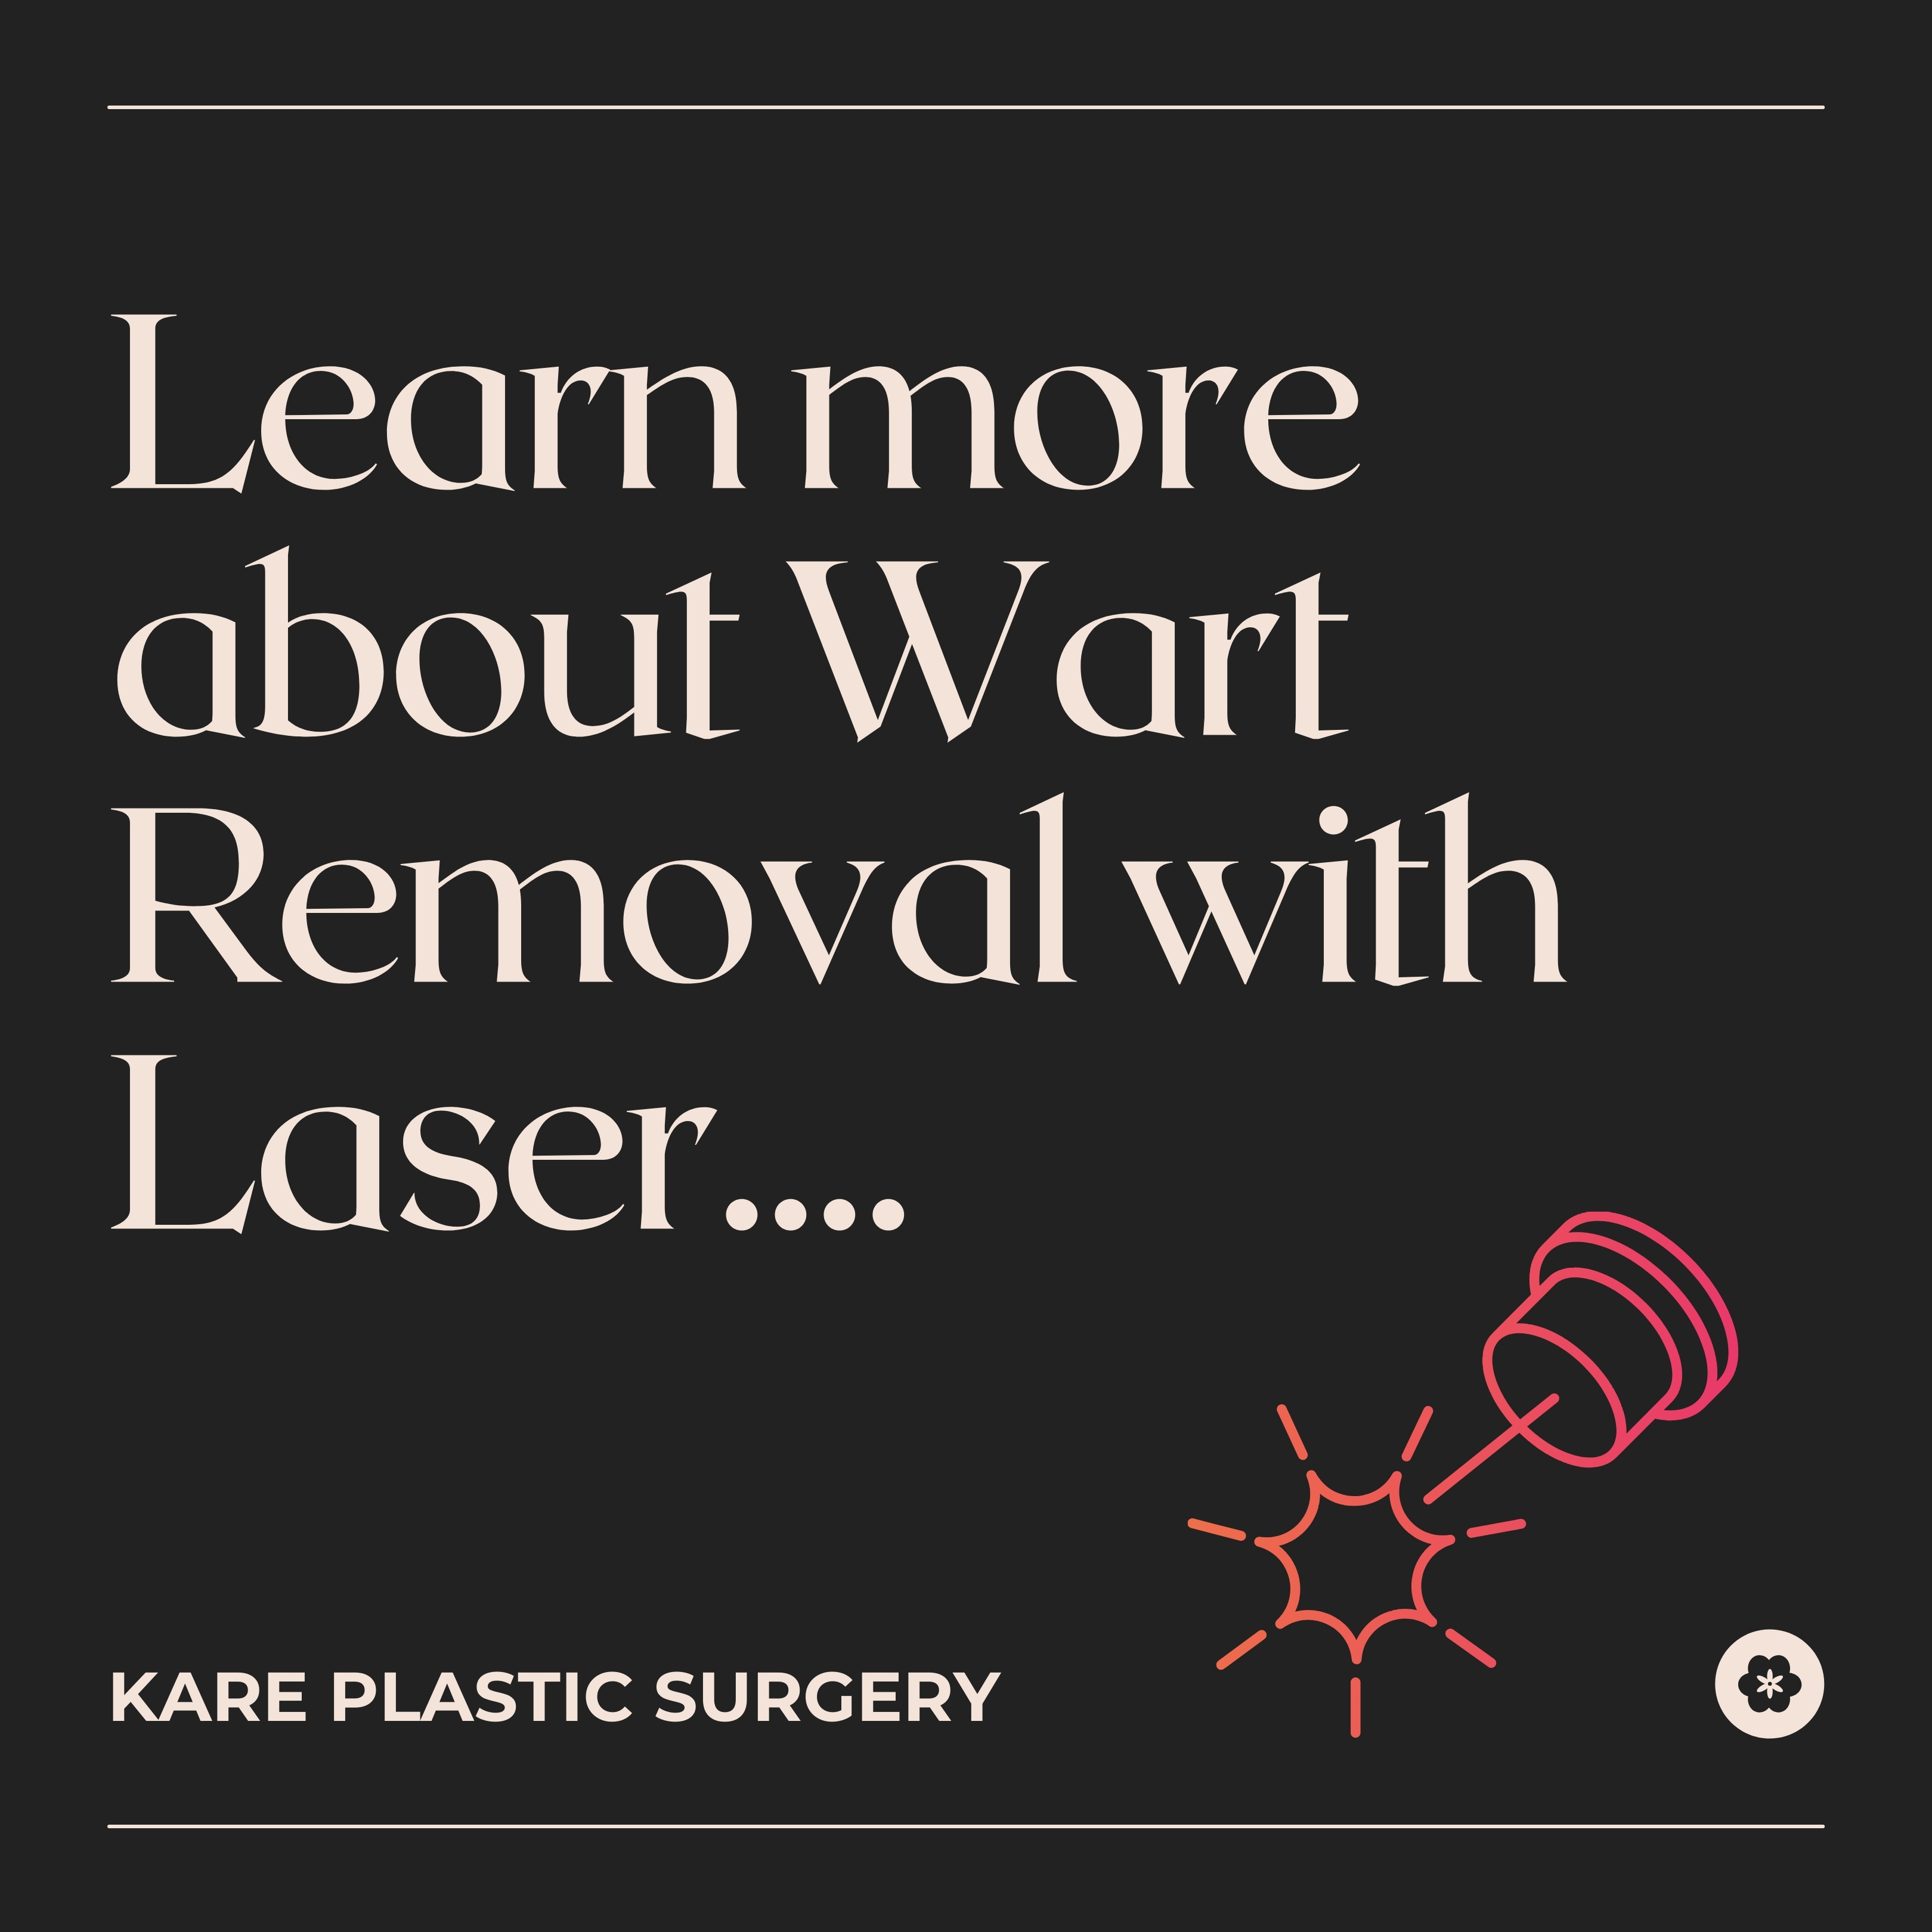 Laser wart removal in santa Monica at Kare plastic surgery